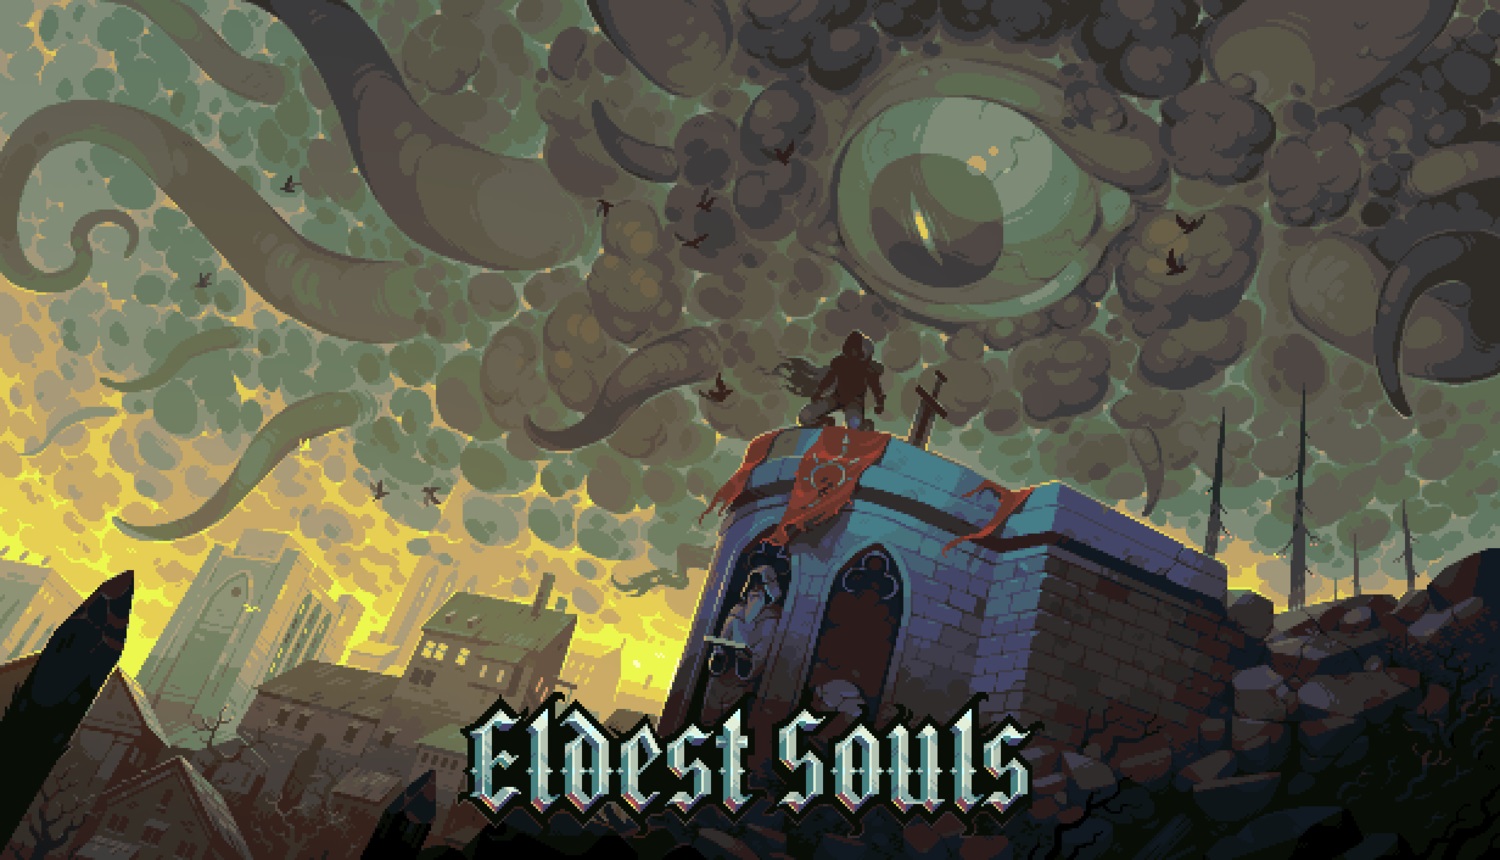 Eldest Souls download the last version for iphone